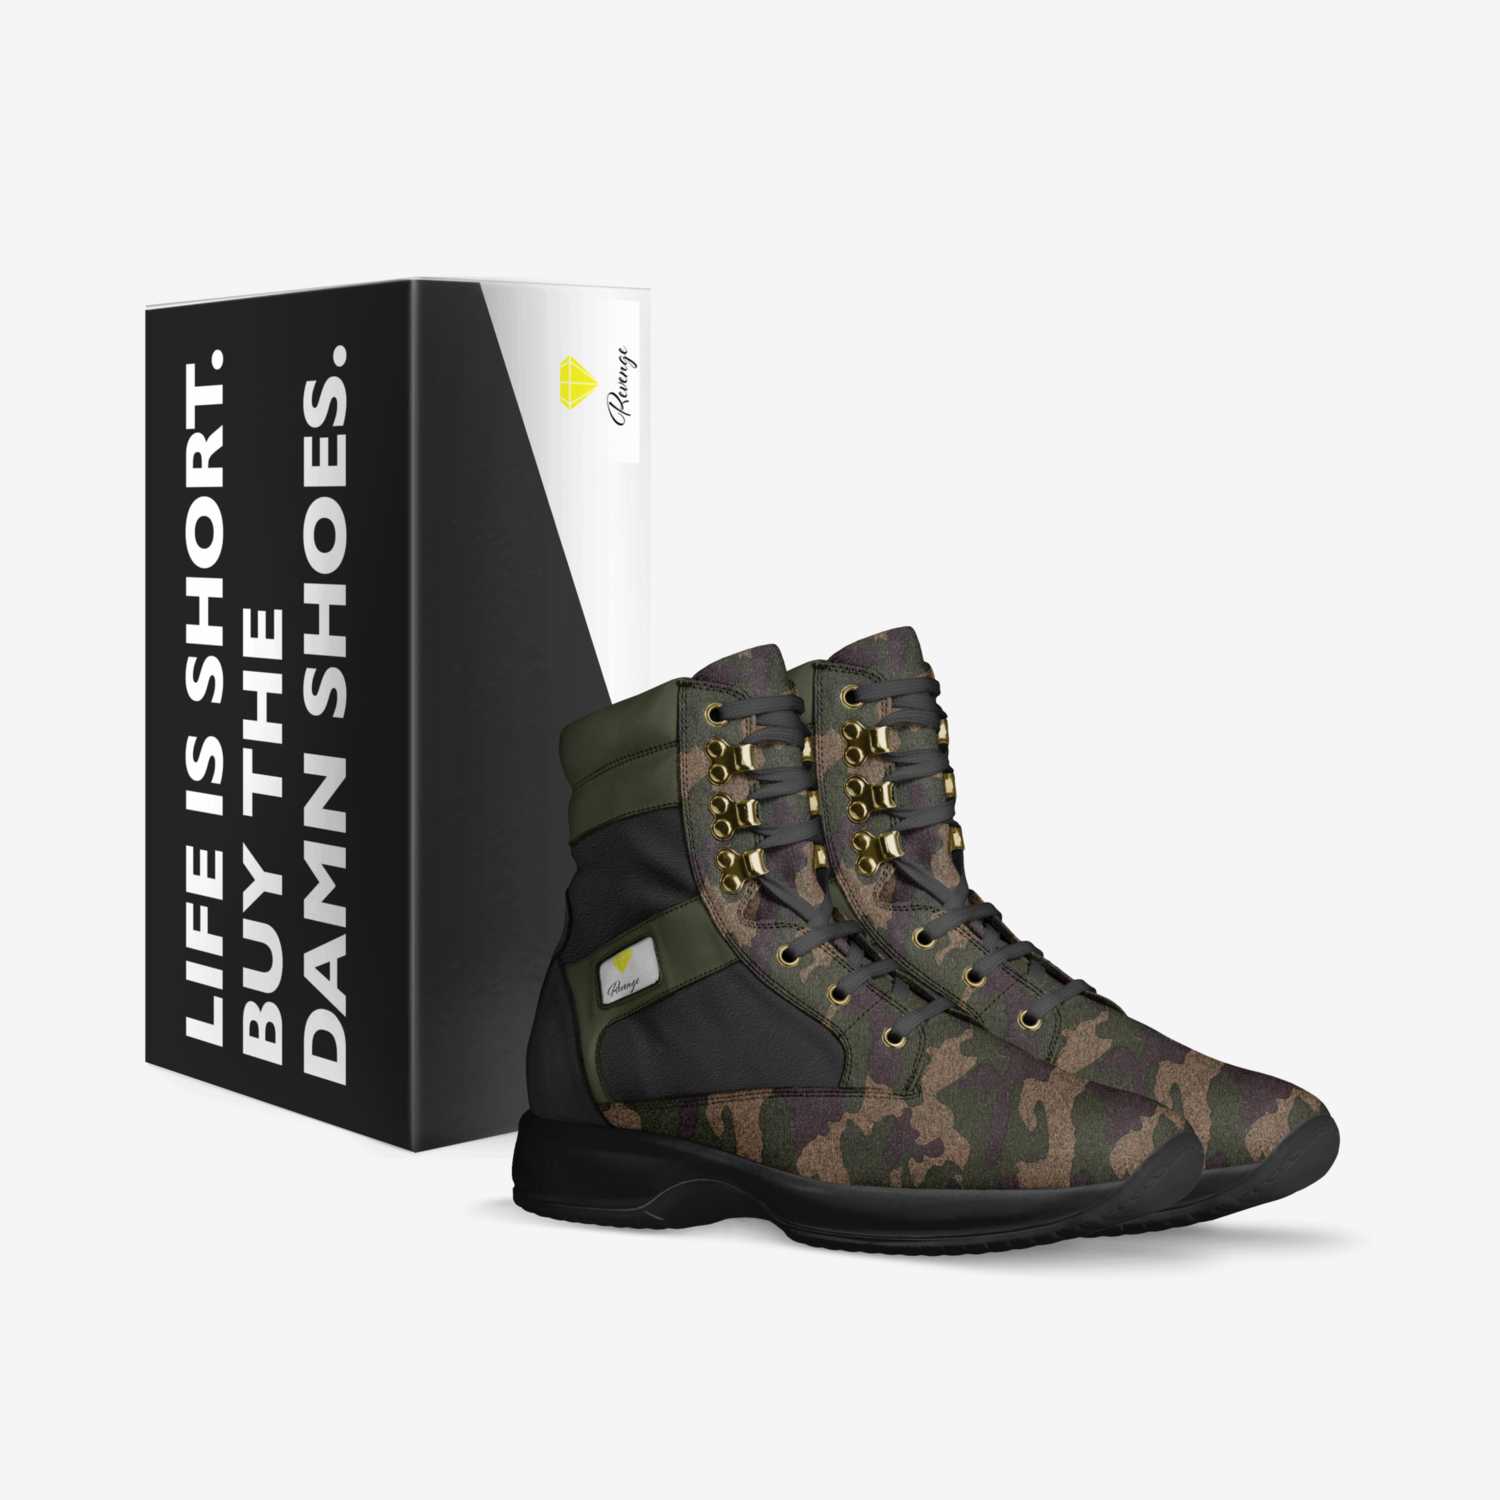 Revenge custom made in Italy shoes by Shantel Nashae | Box view